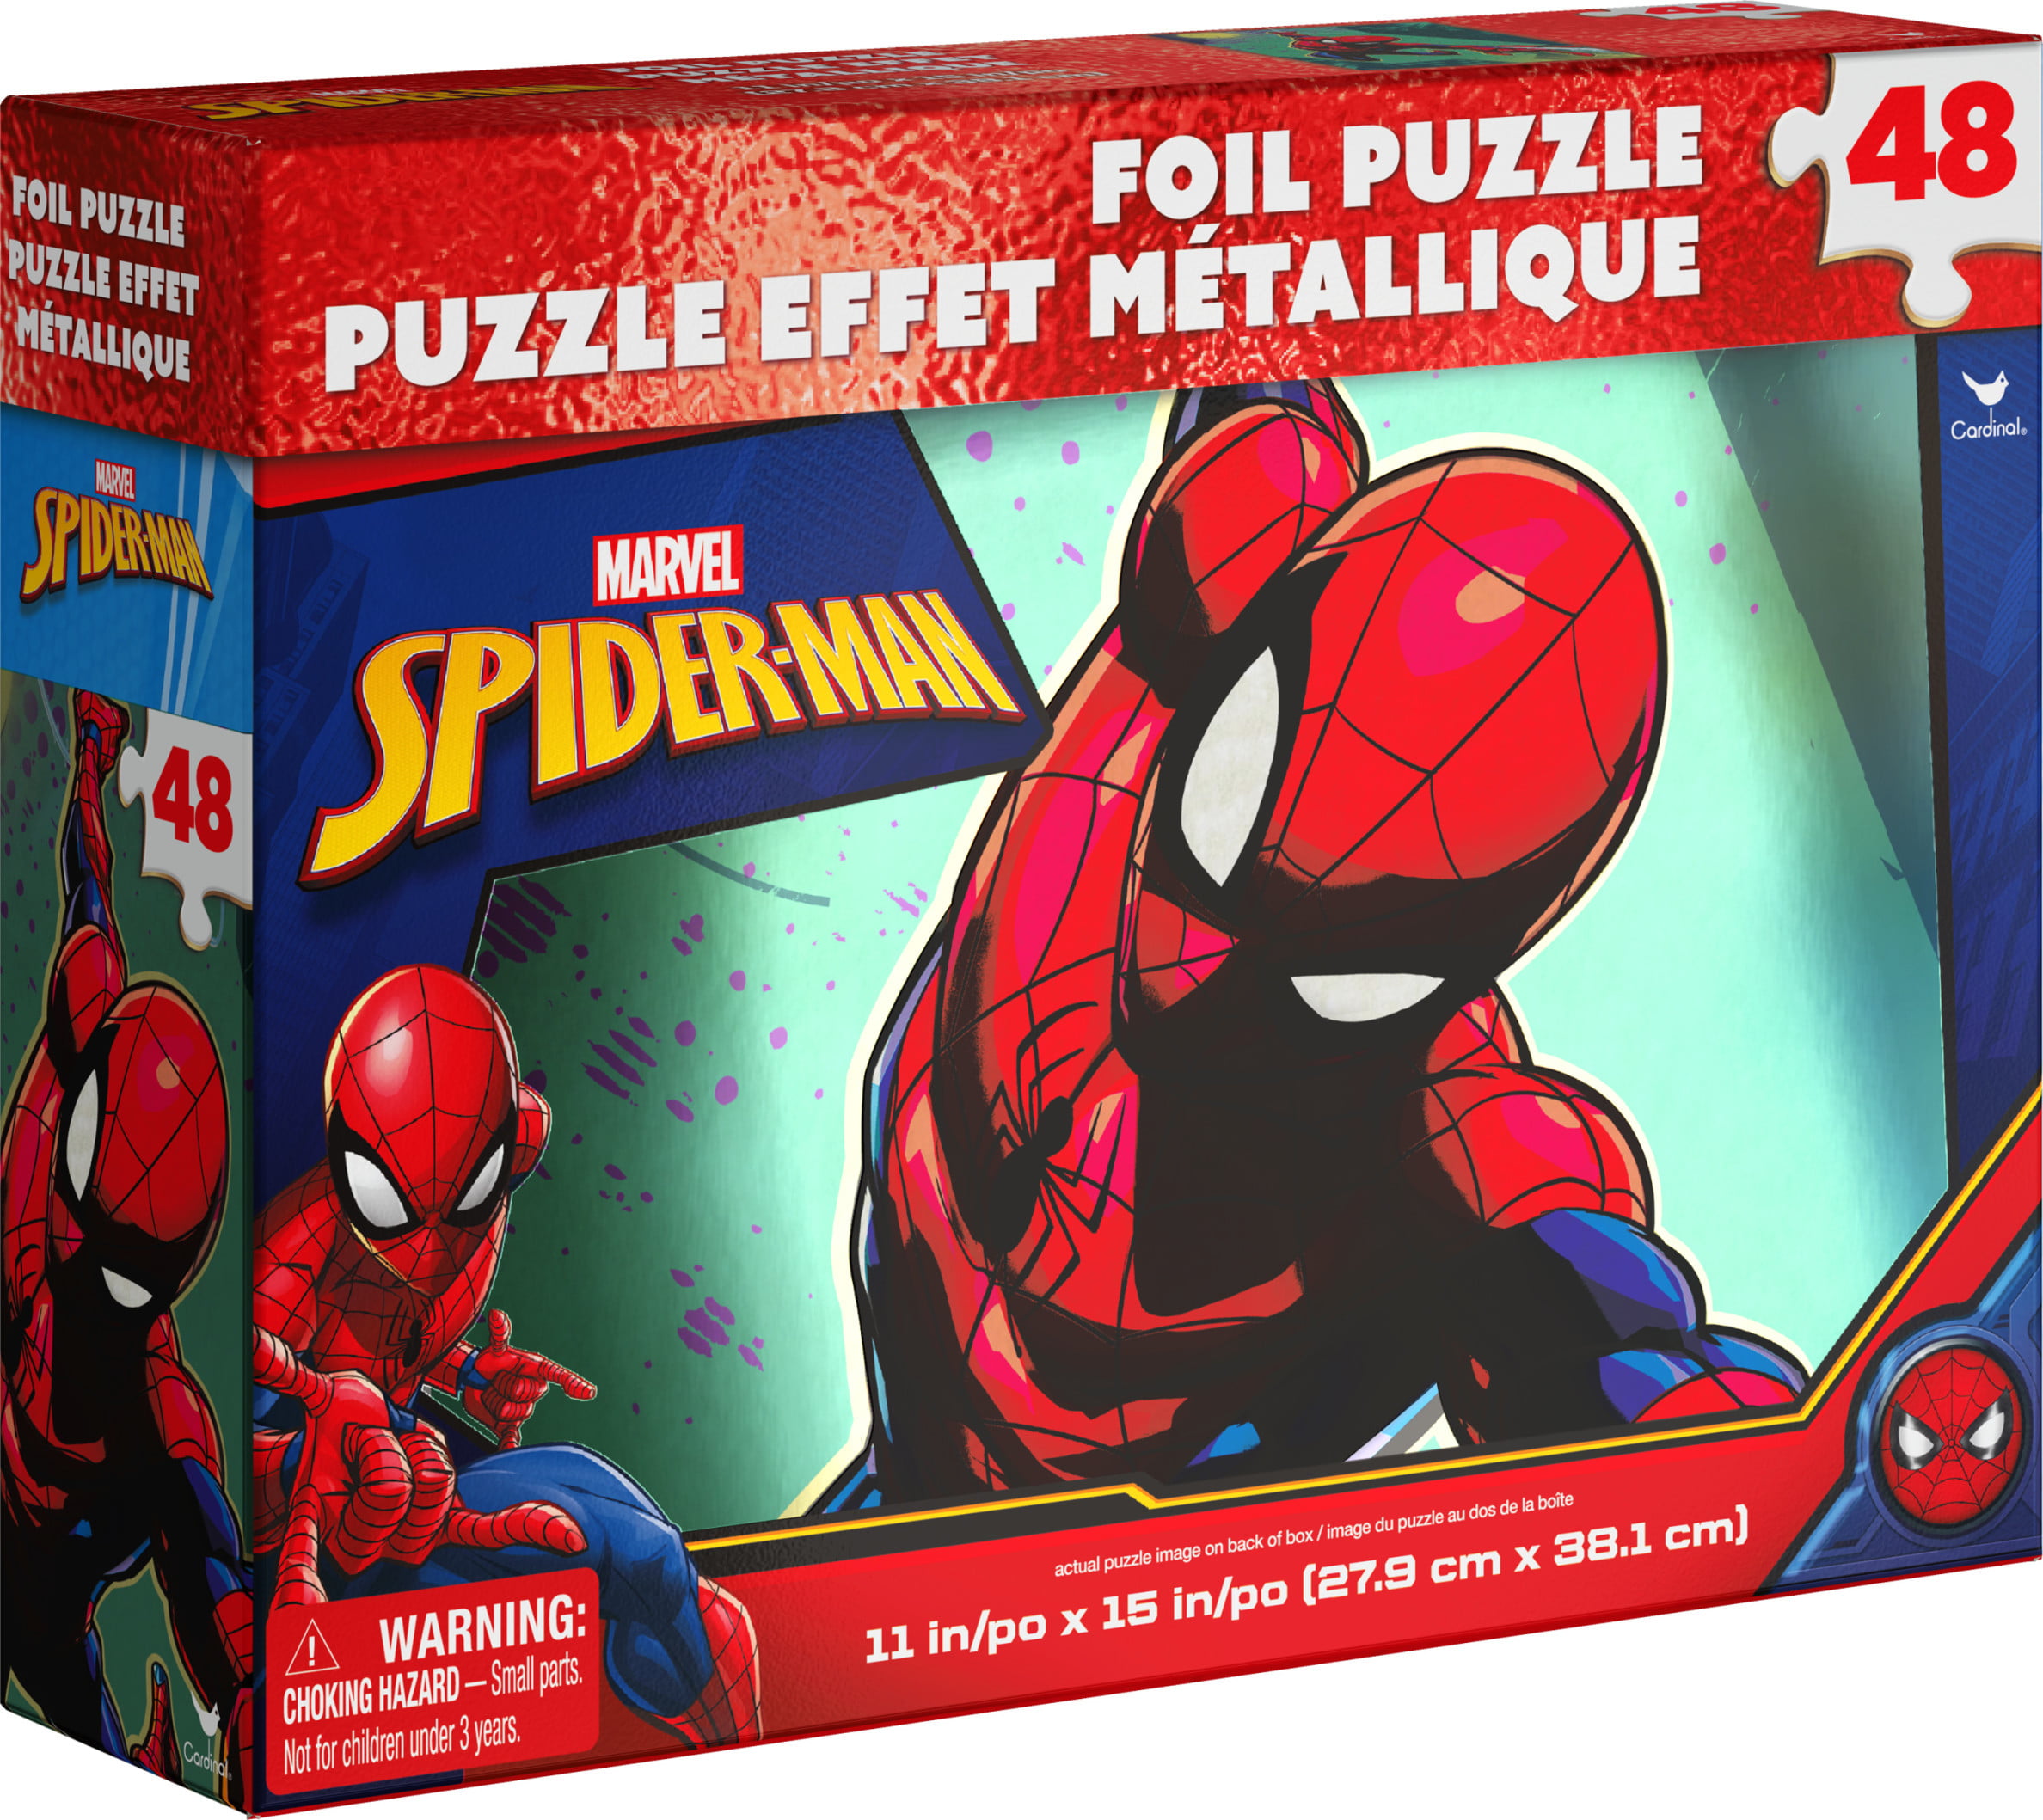 NIB Marvel Spider-Man 48 Piece Foil Puzzle 7"x 5" 